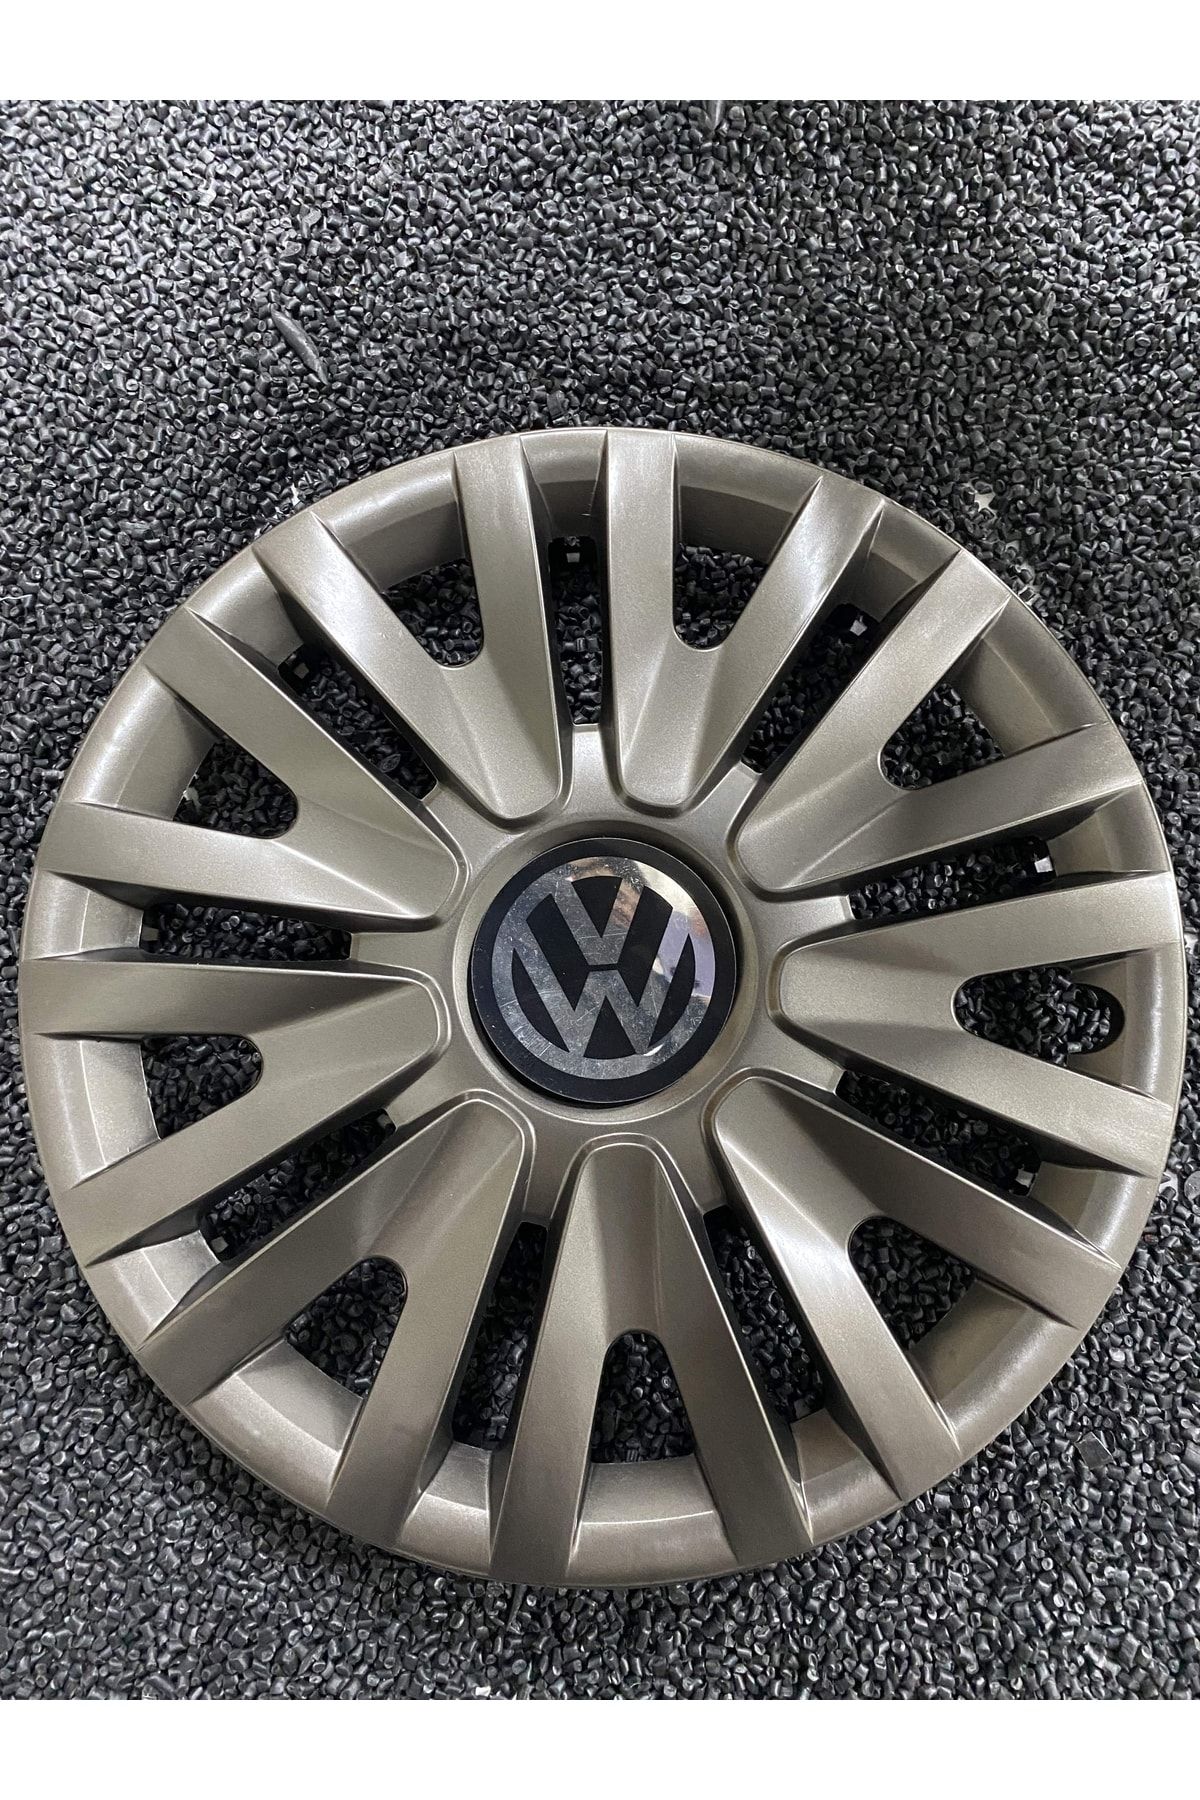 YILAPJANT Volkswagen Polo 14" Jant Kapağı Kırılmaz Füme